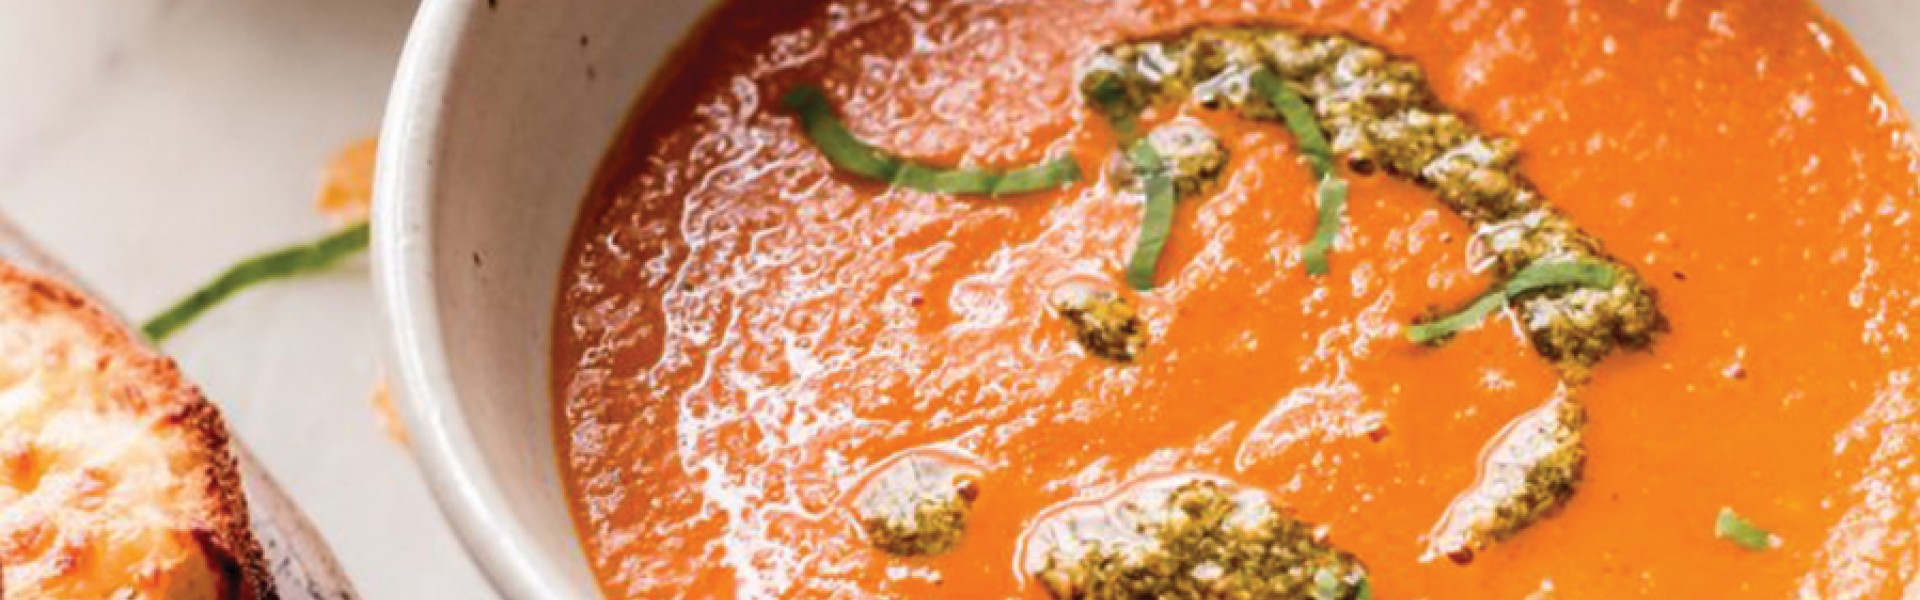 Tomato-Basil-Soup Banner